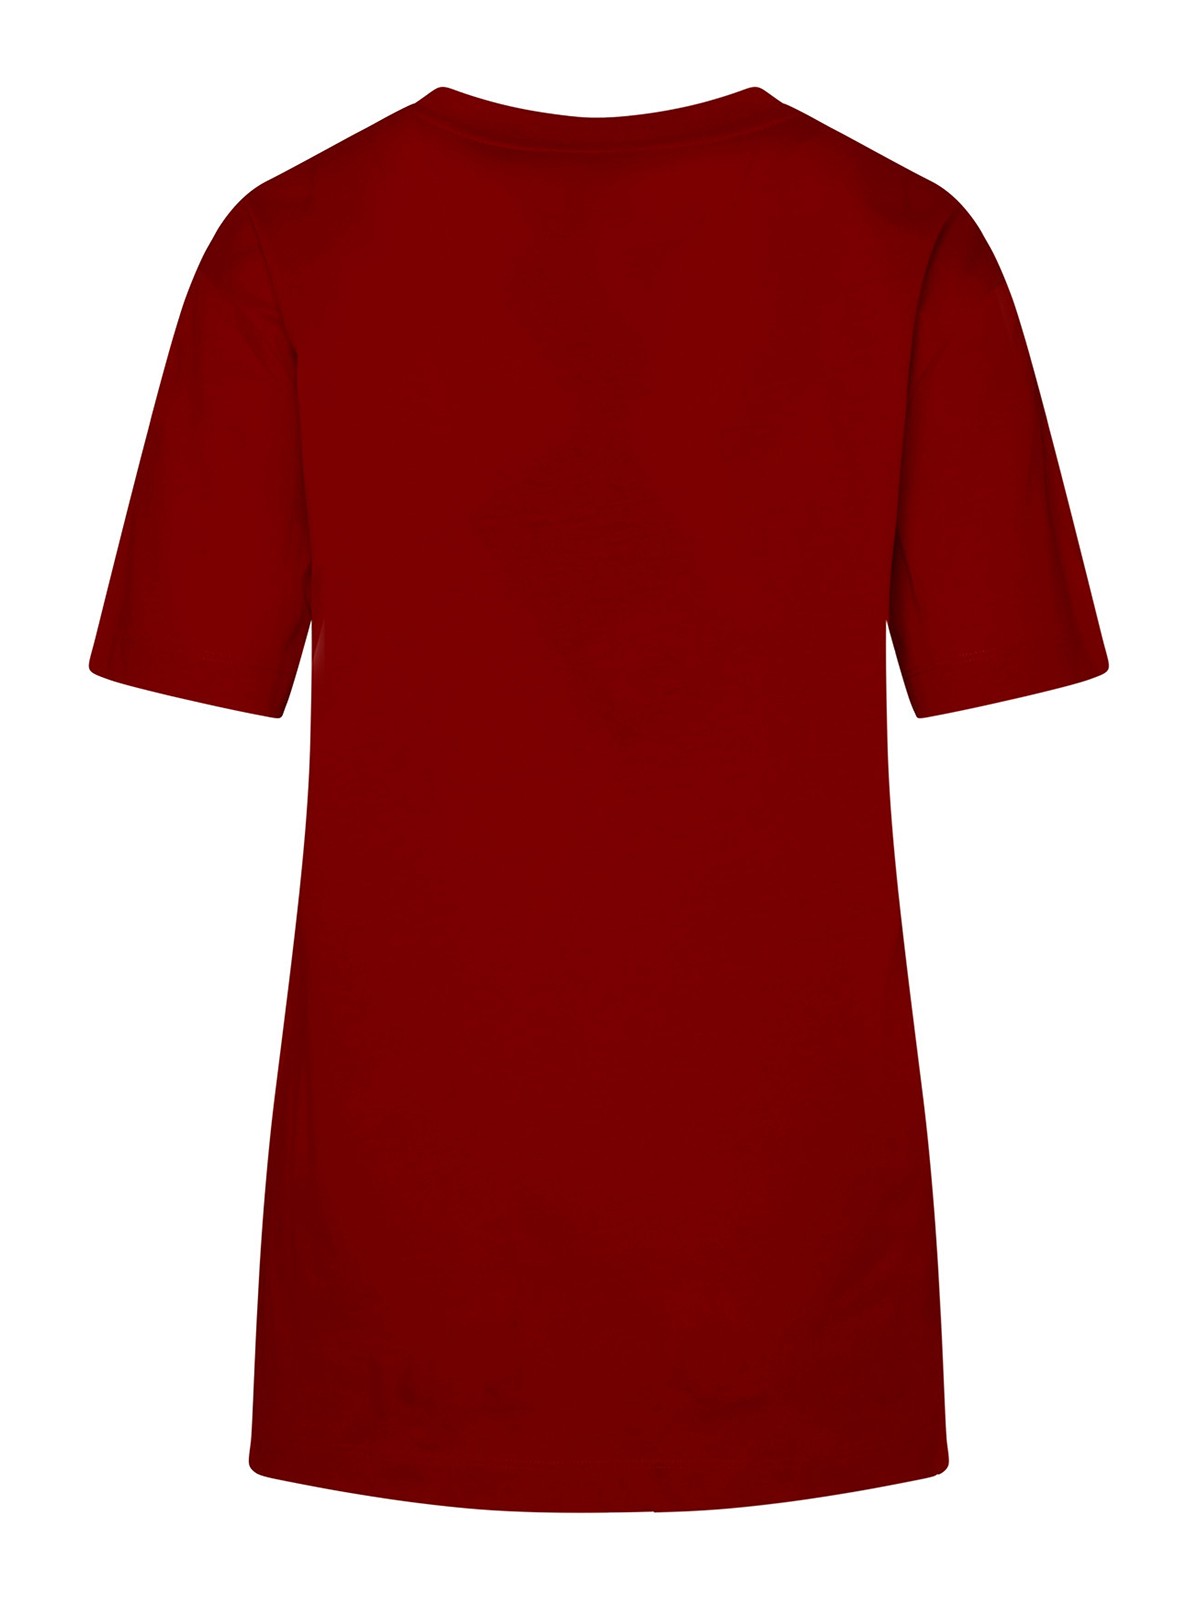 Shop Patou Camiseta - Rojo In Red